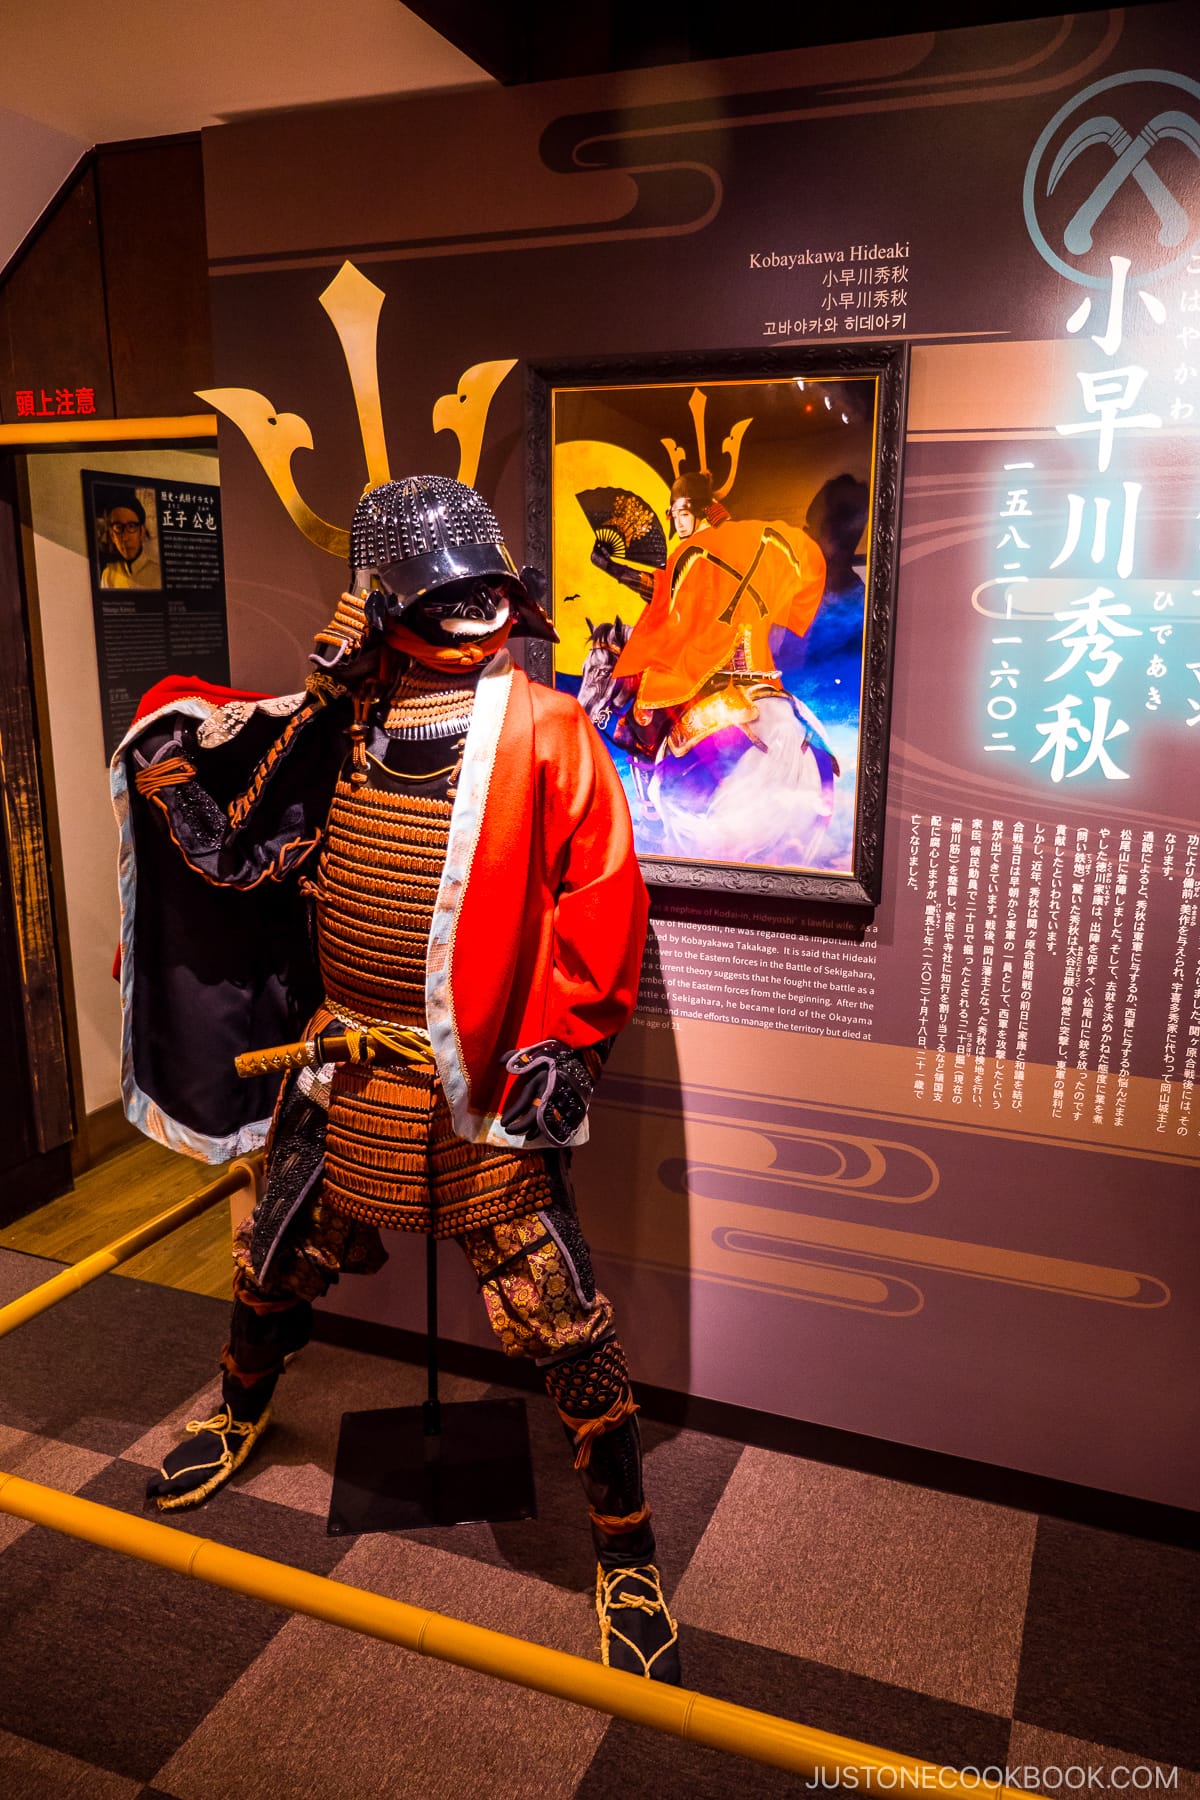 a mannequin wearing battle armor